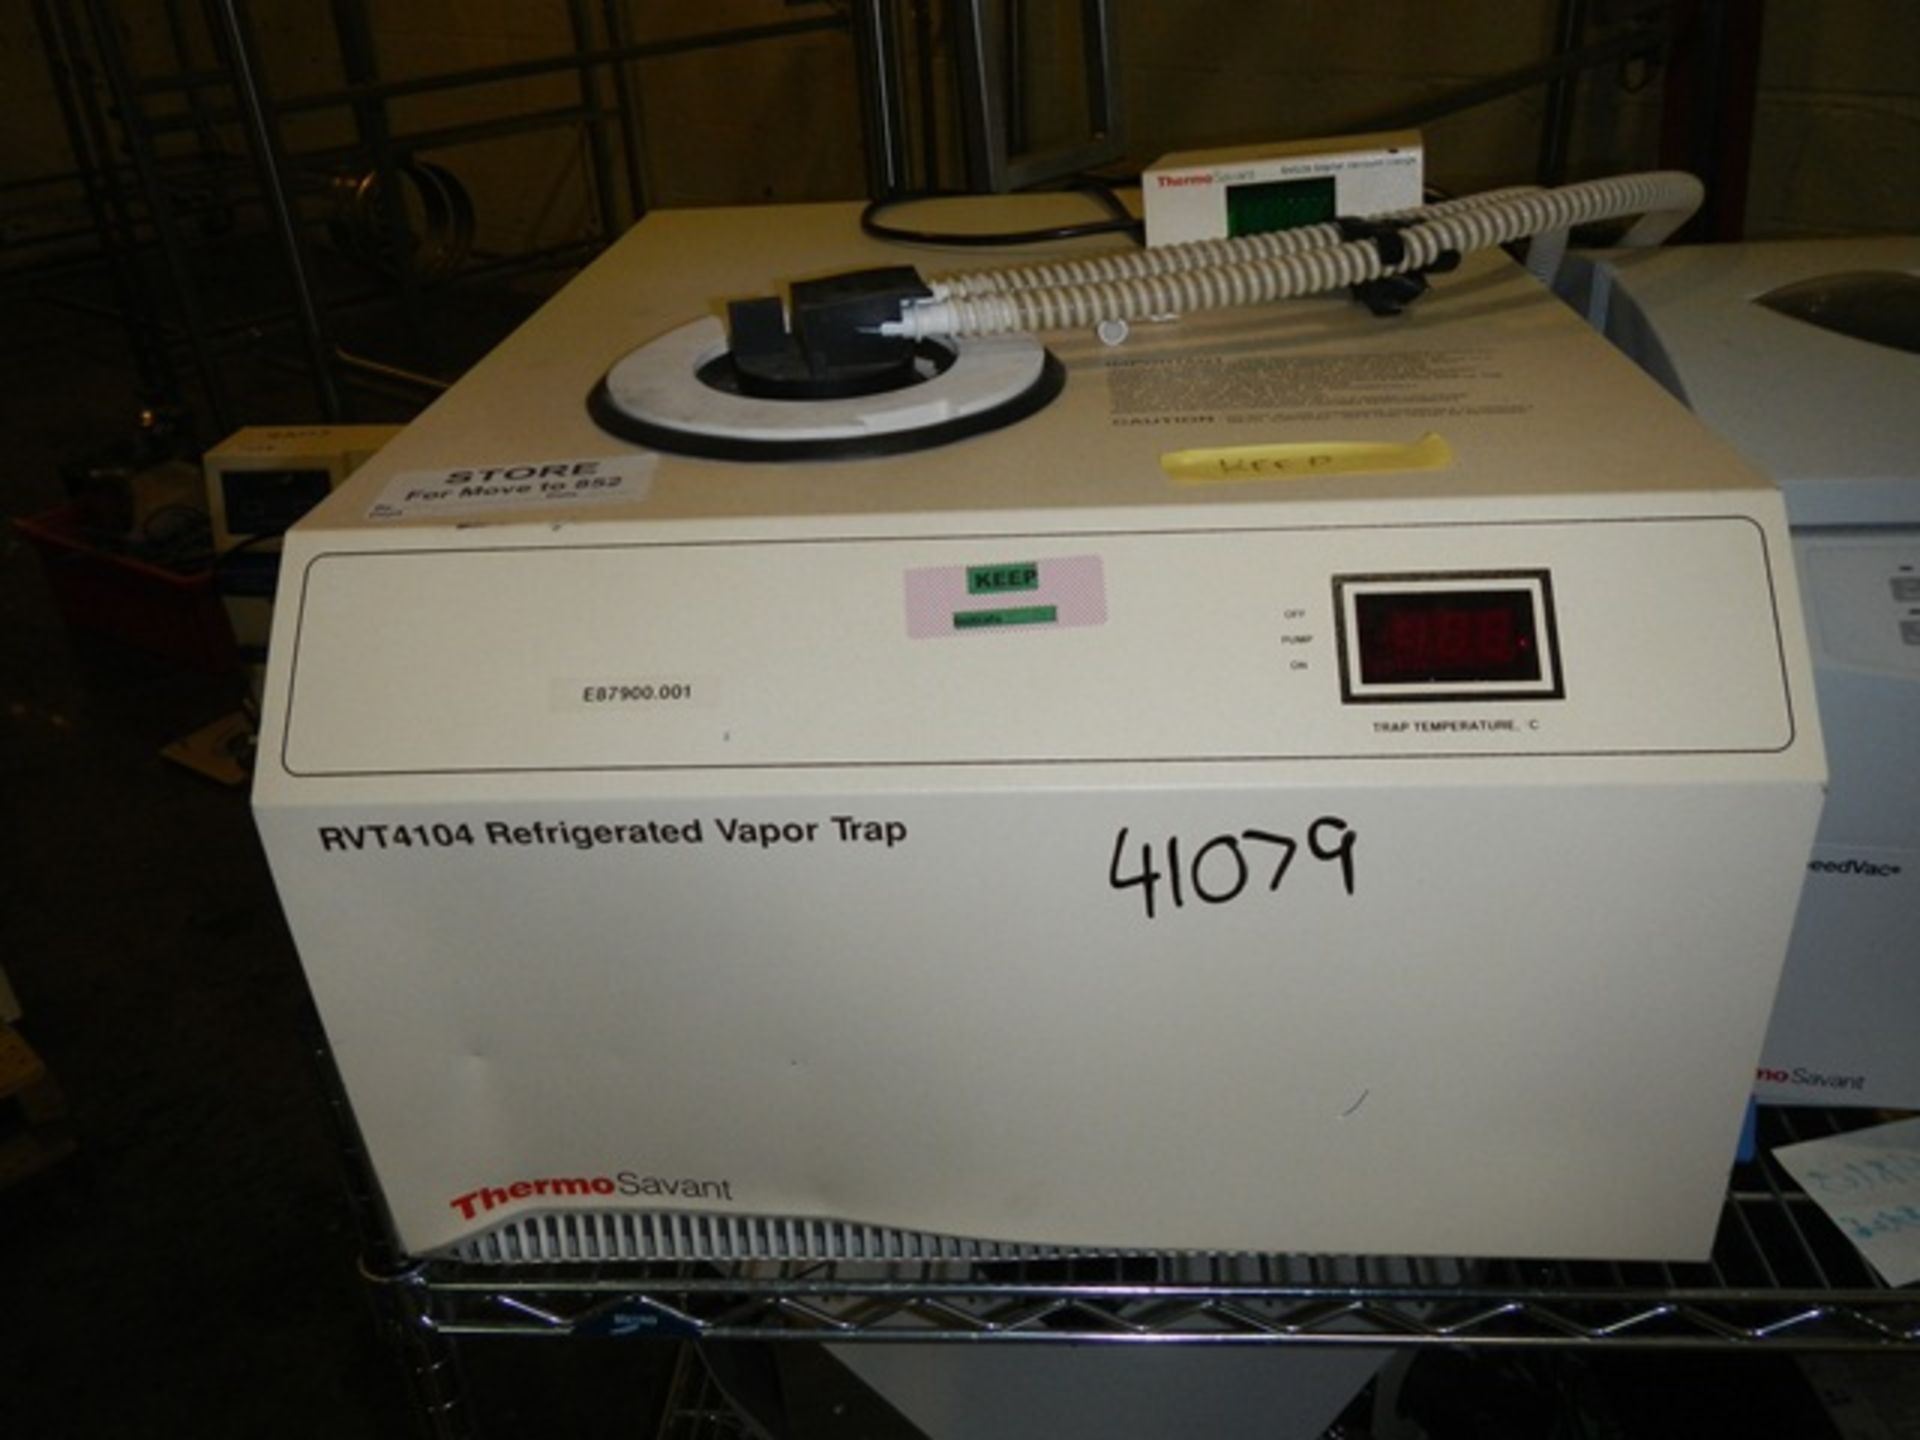 Thermo Savant Vapor Trap model RVT4104-115 Refrigerated vapor trap unit. serial# 025420171-1K